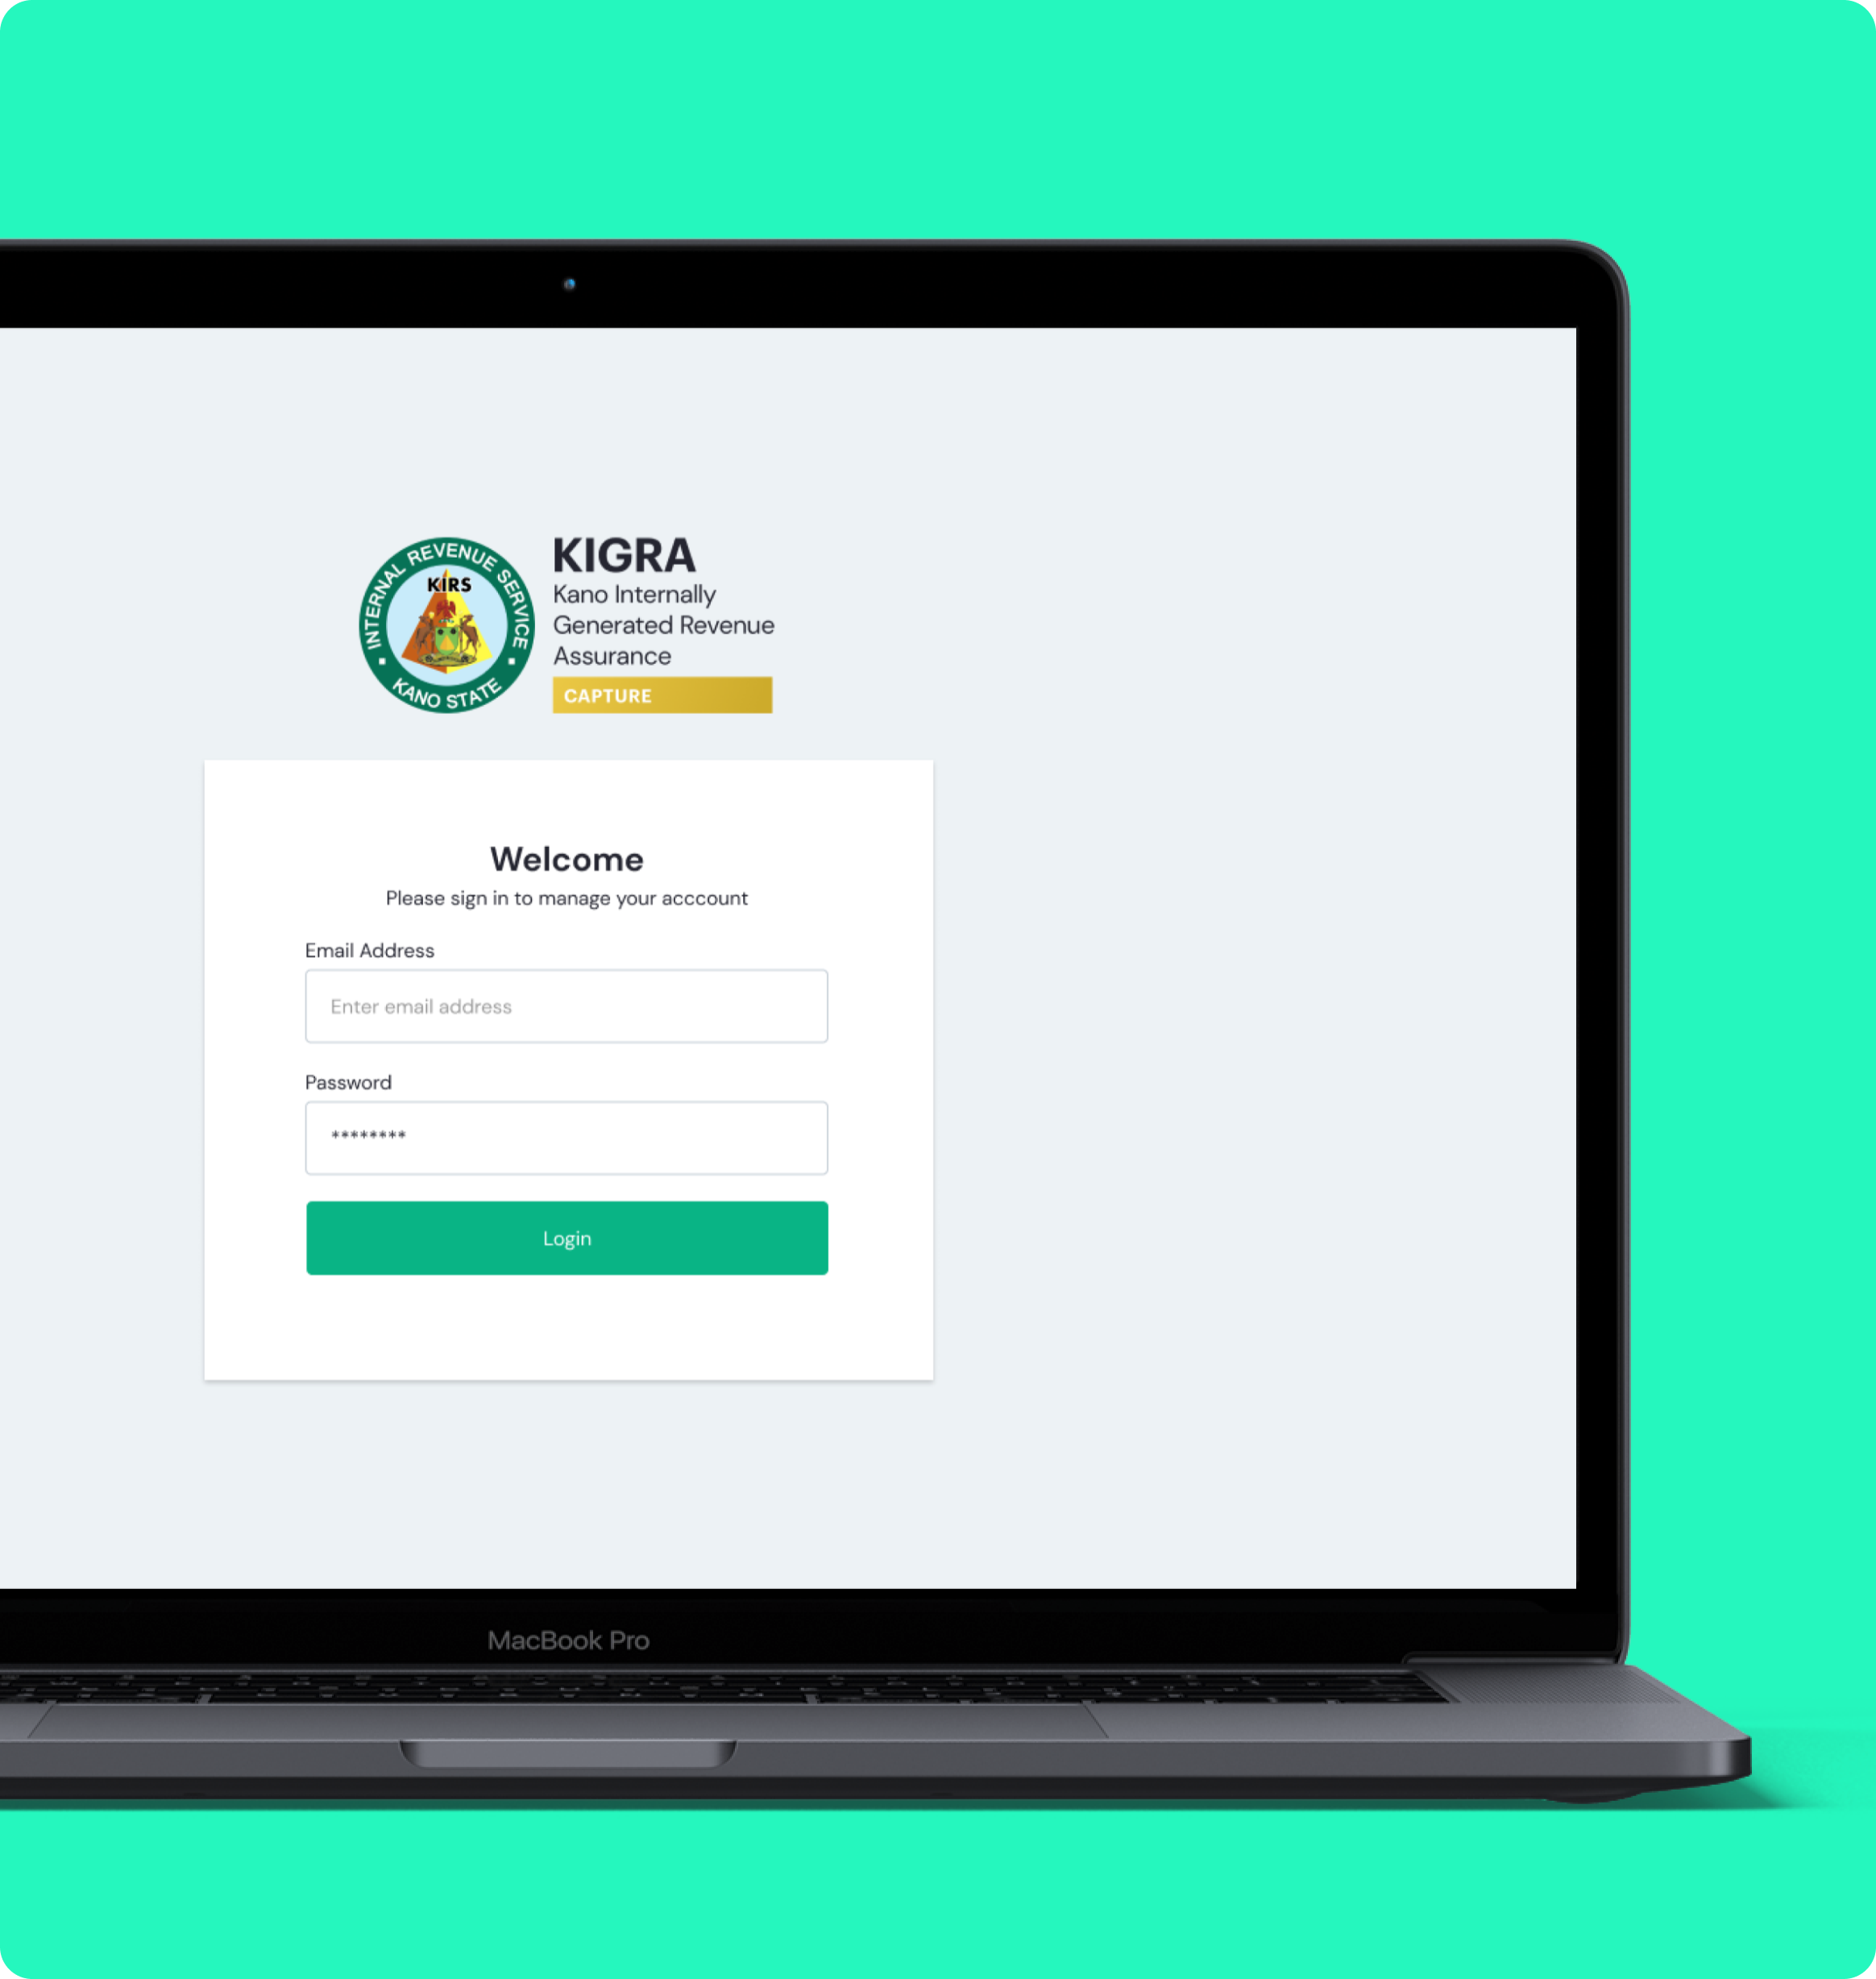 KIGRA- Internal revenue generation platform